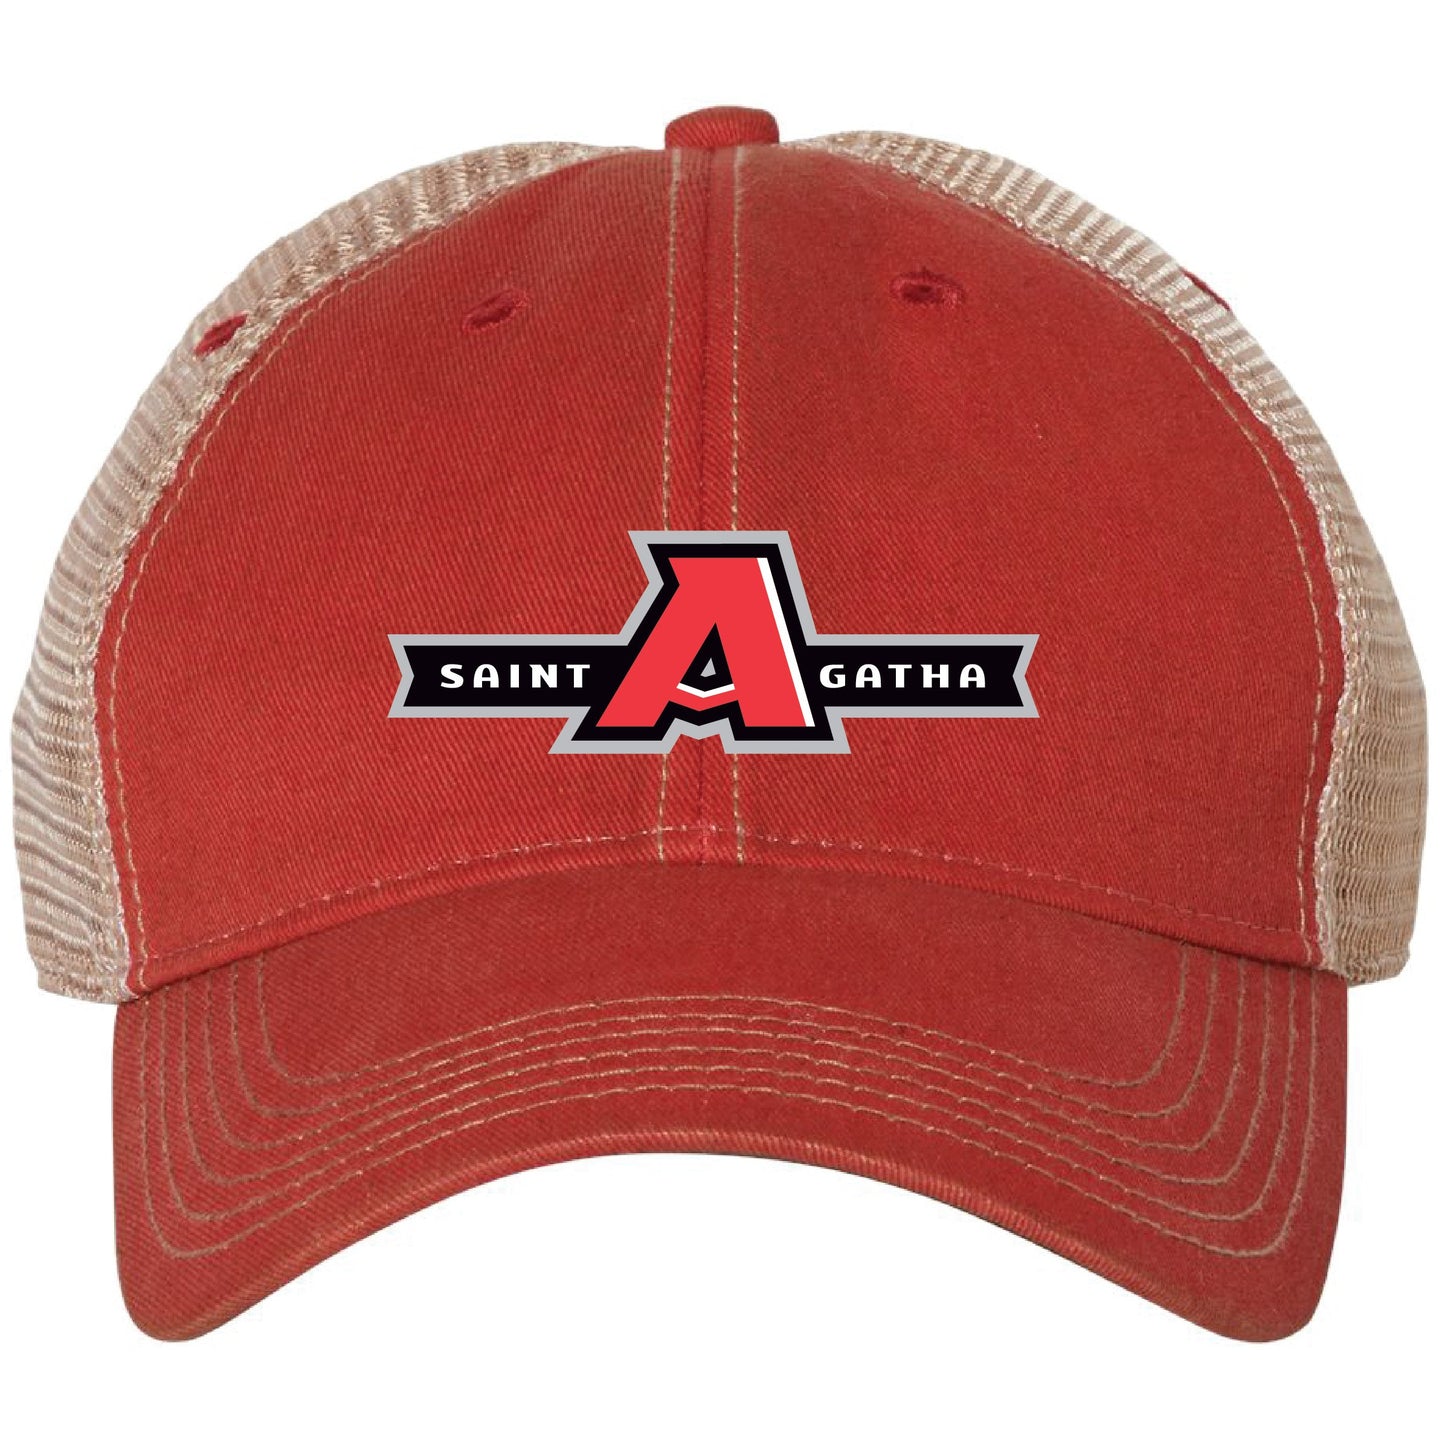 St. Agatha Trucker Hat